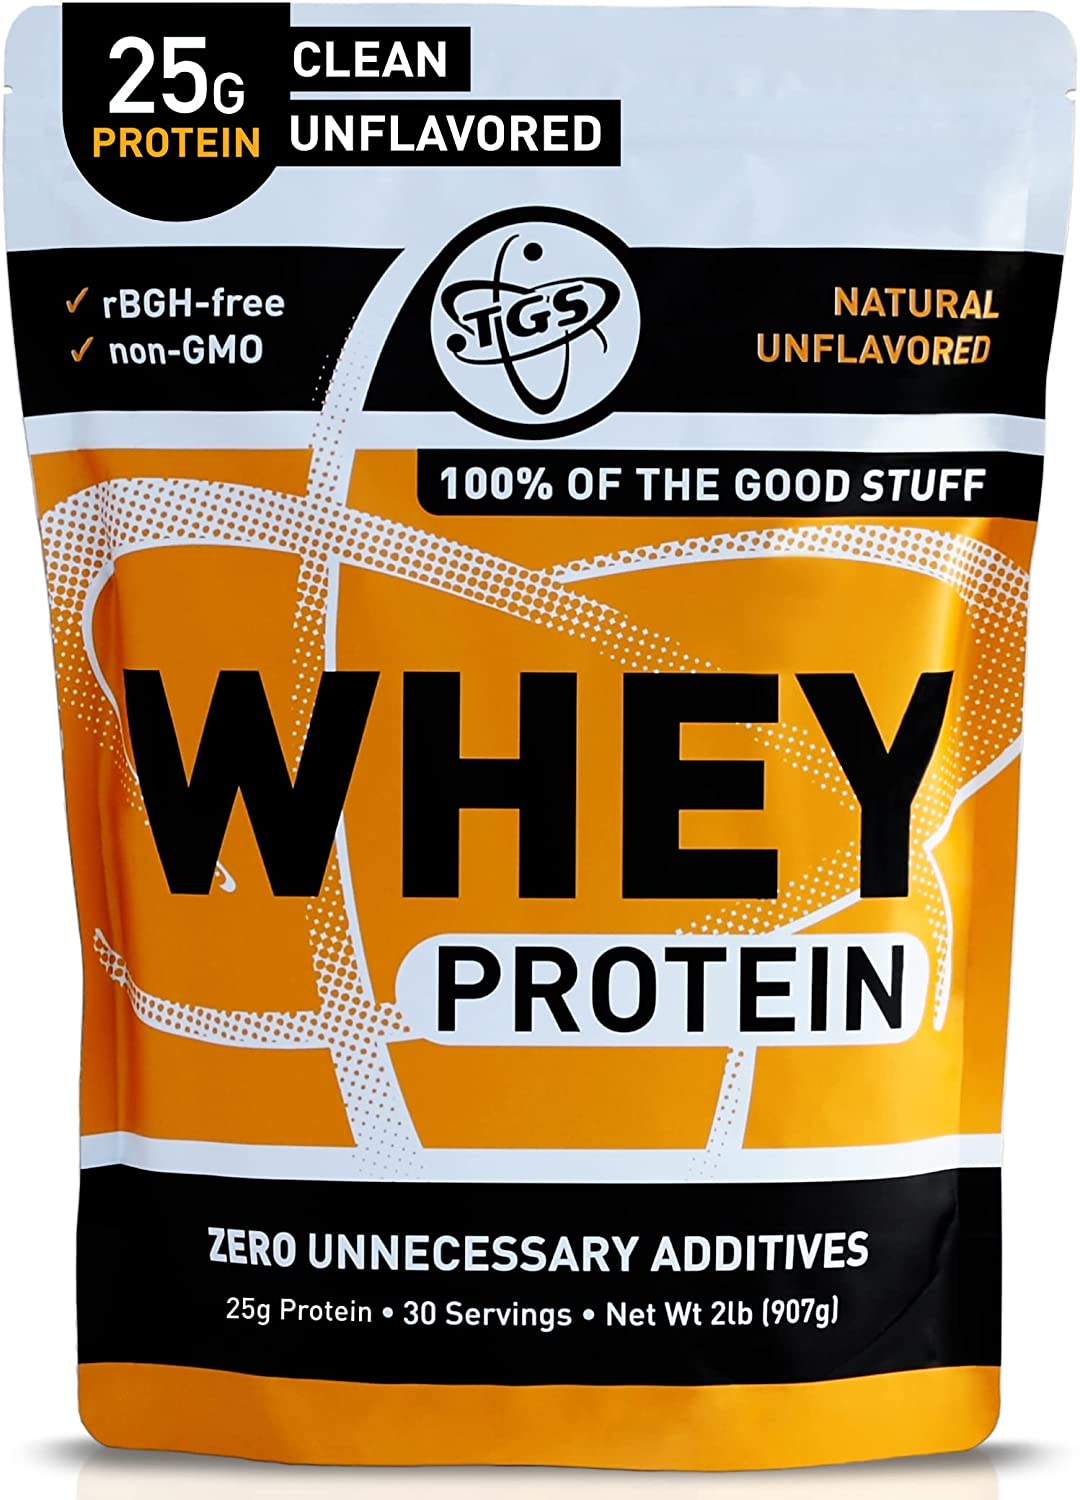 TGS Vegetarian Soy-Free Protein Powder